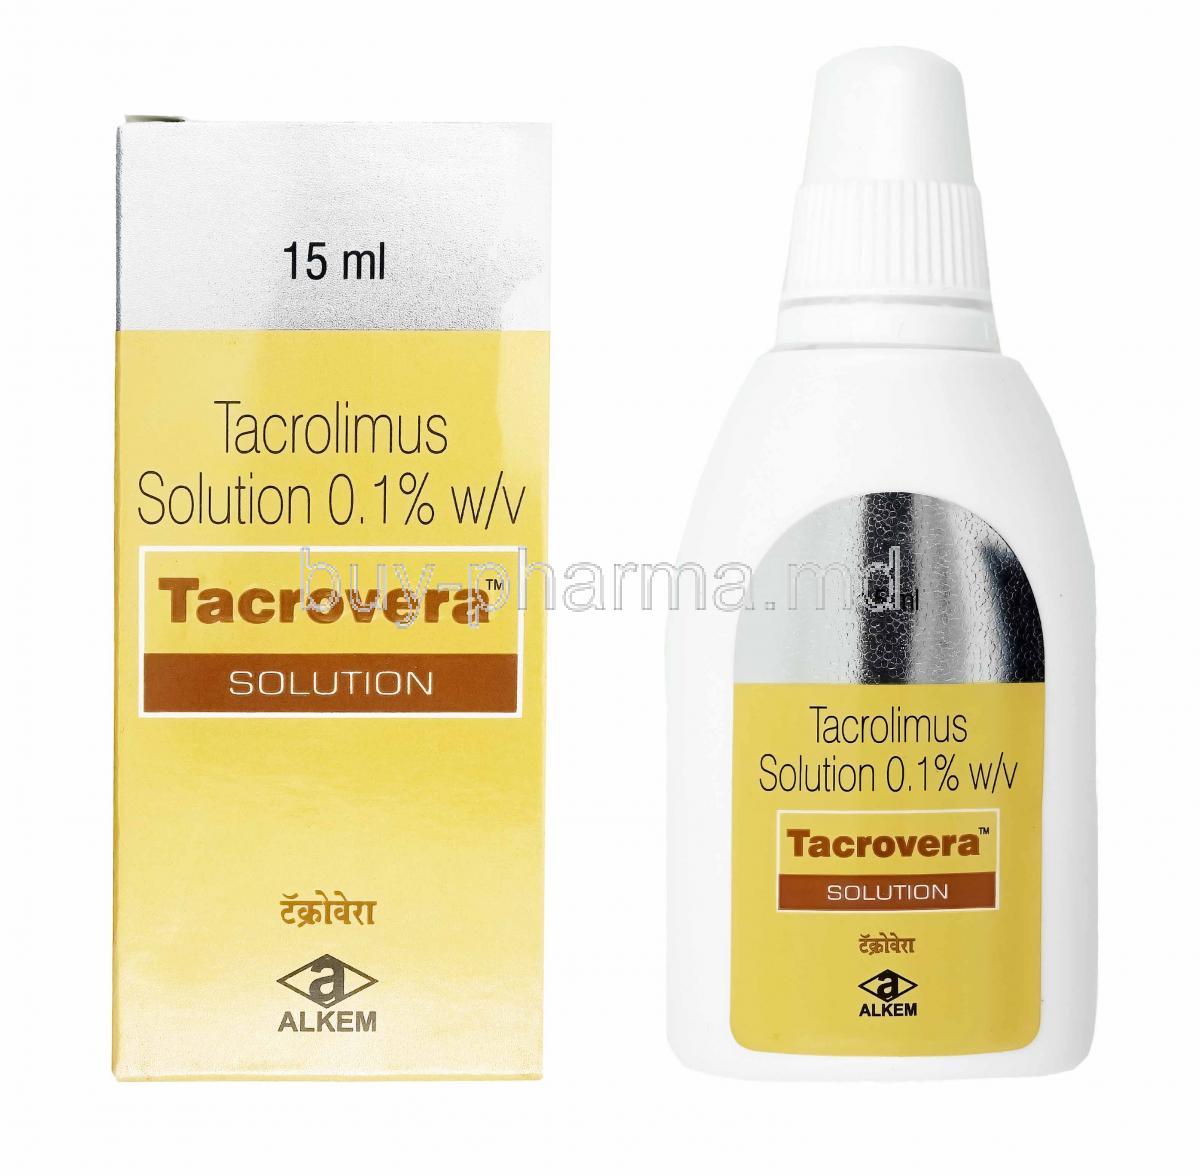 Tacrovera Solution, Tacrolimus box, bottle